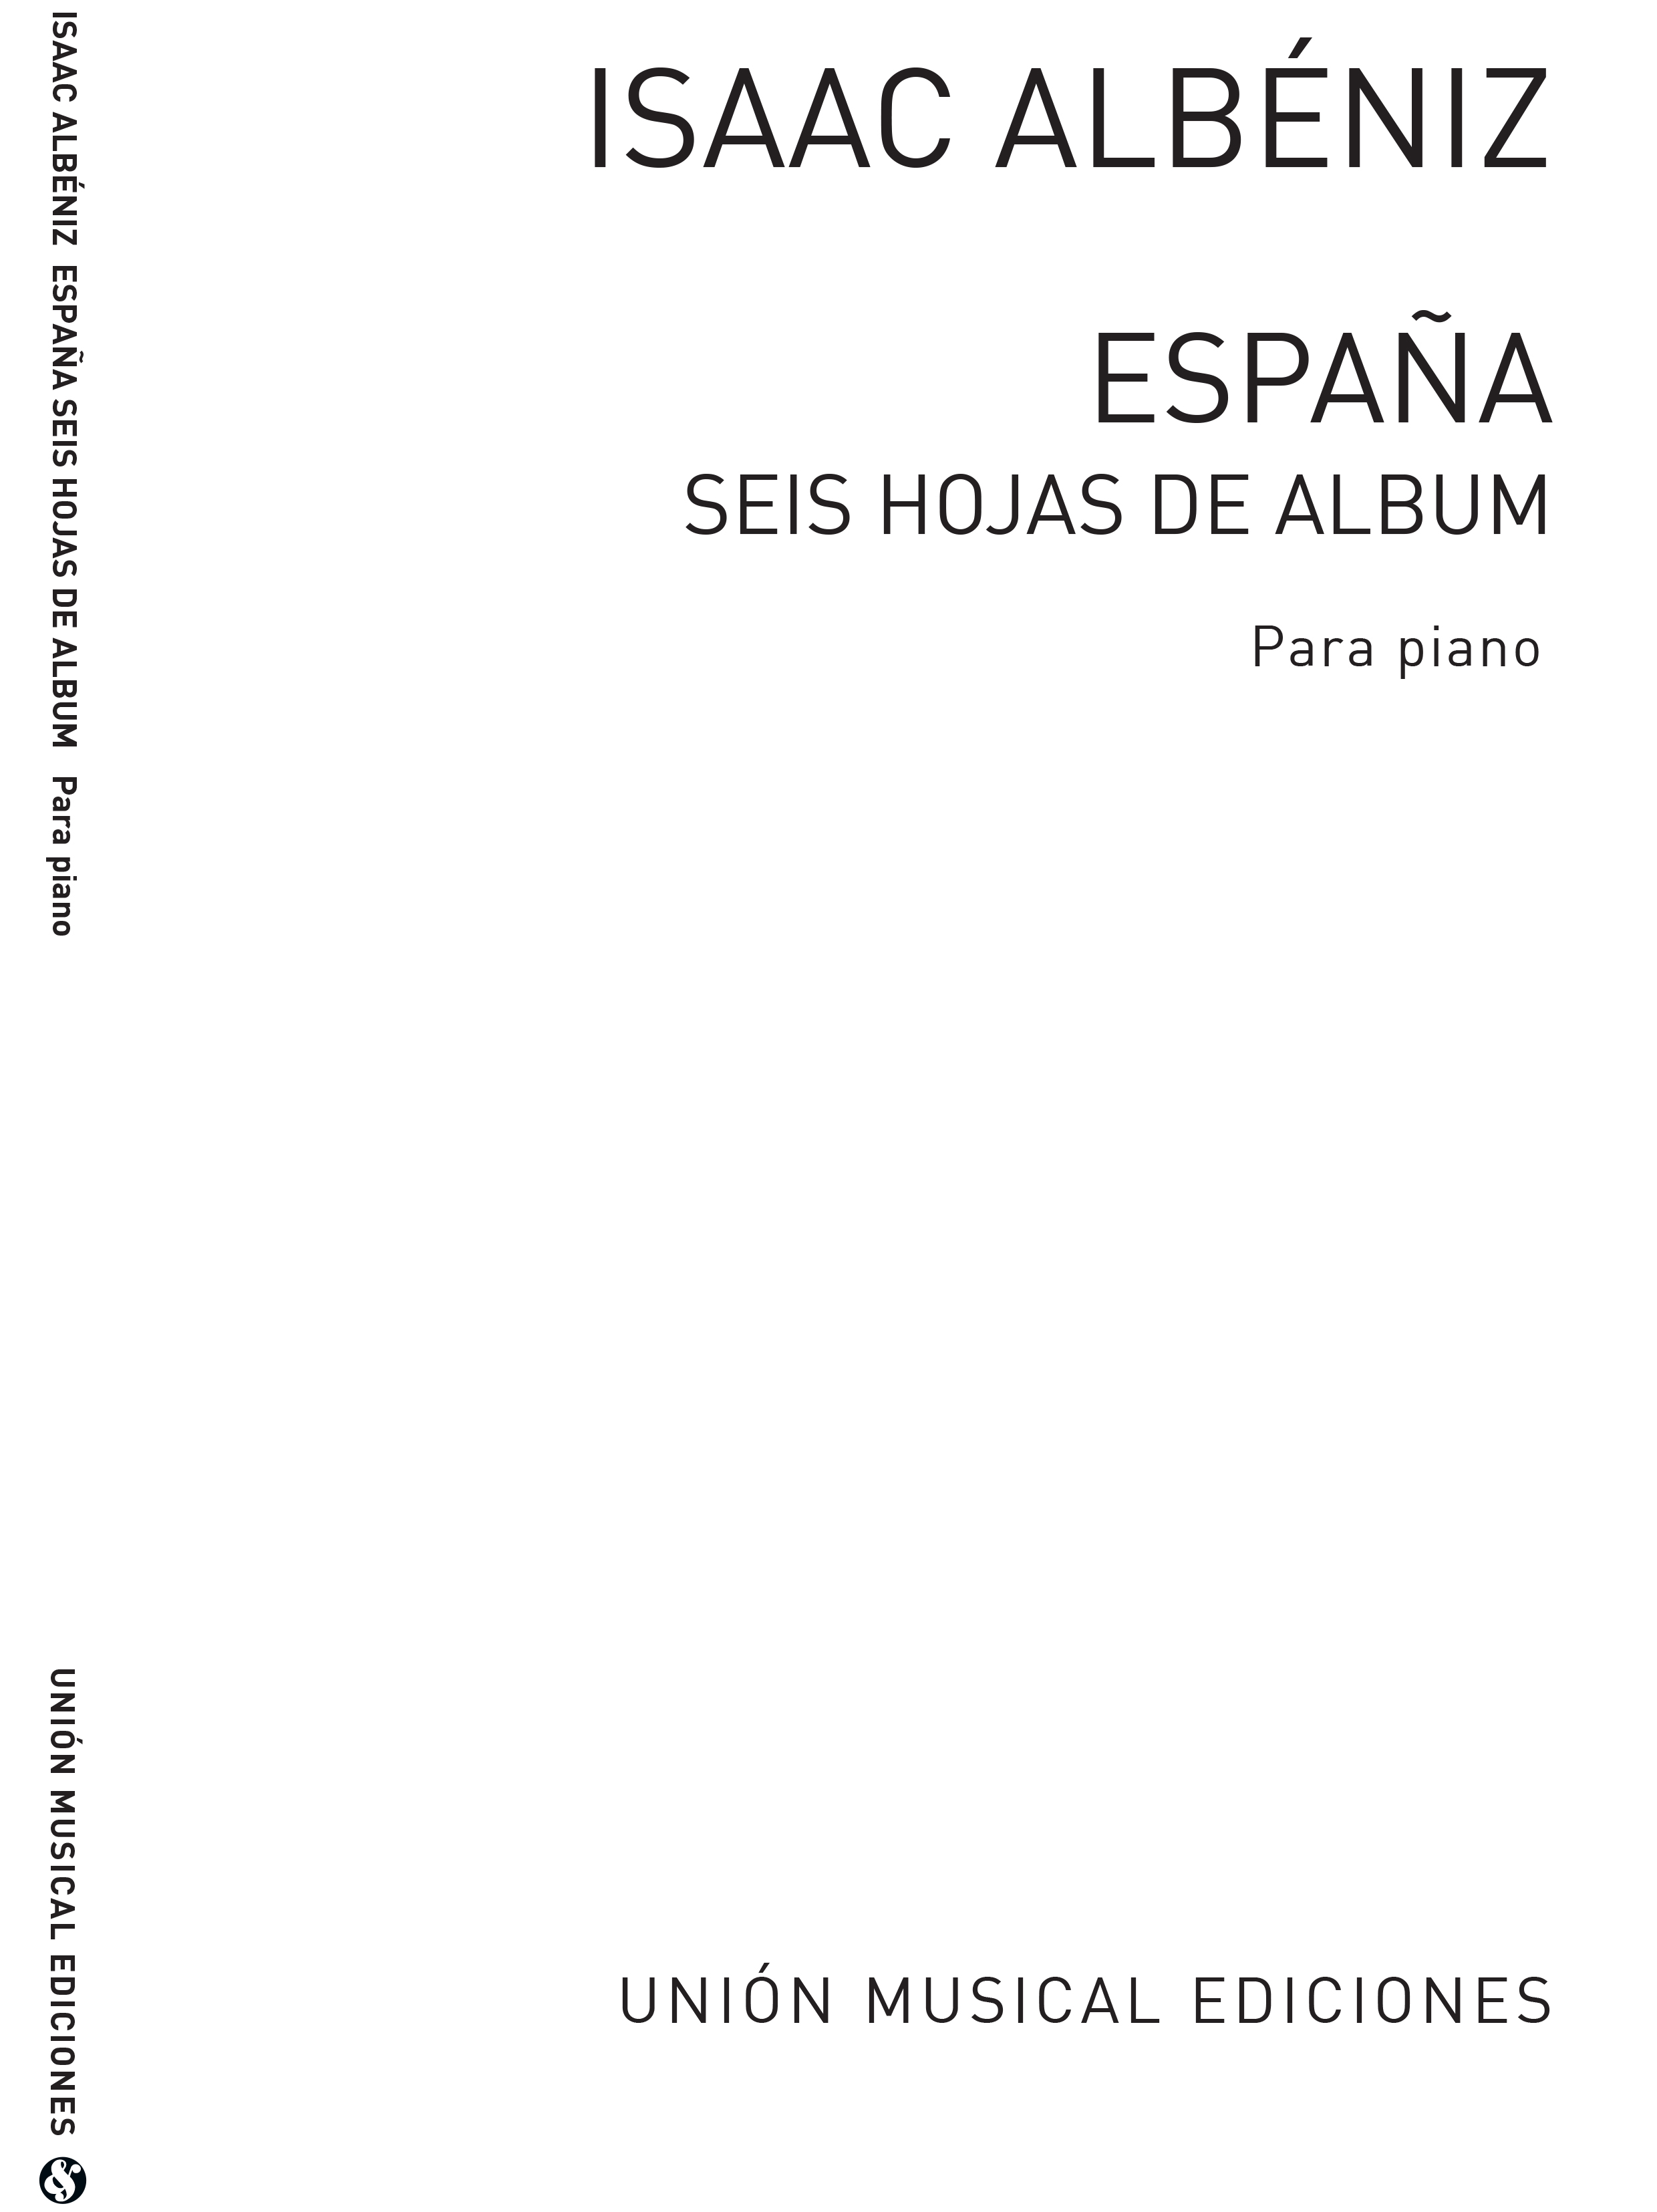 Isaac Albéniz: Albeniz Espana Op.165 Seis Hojas De Album Complete: Piano: